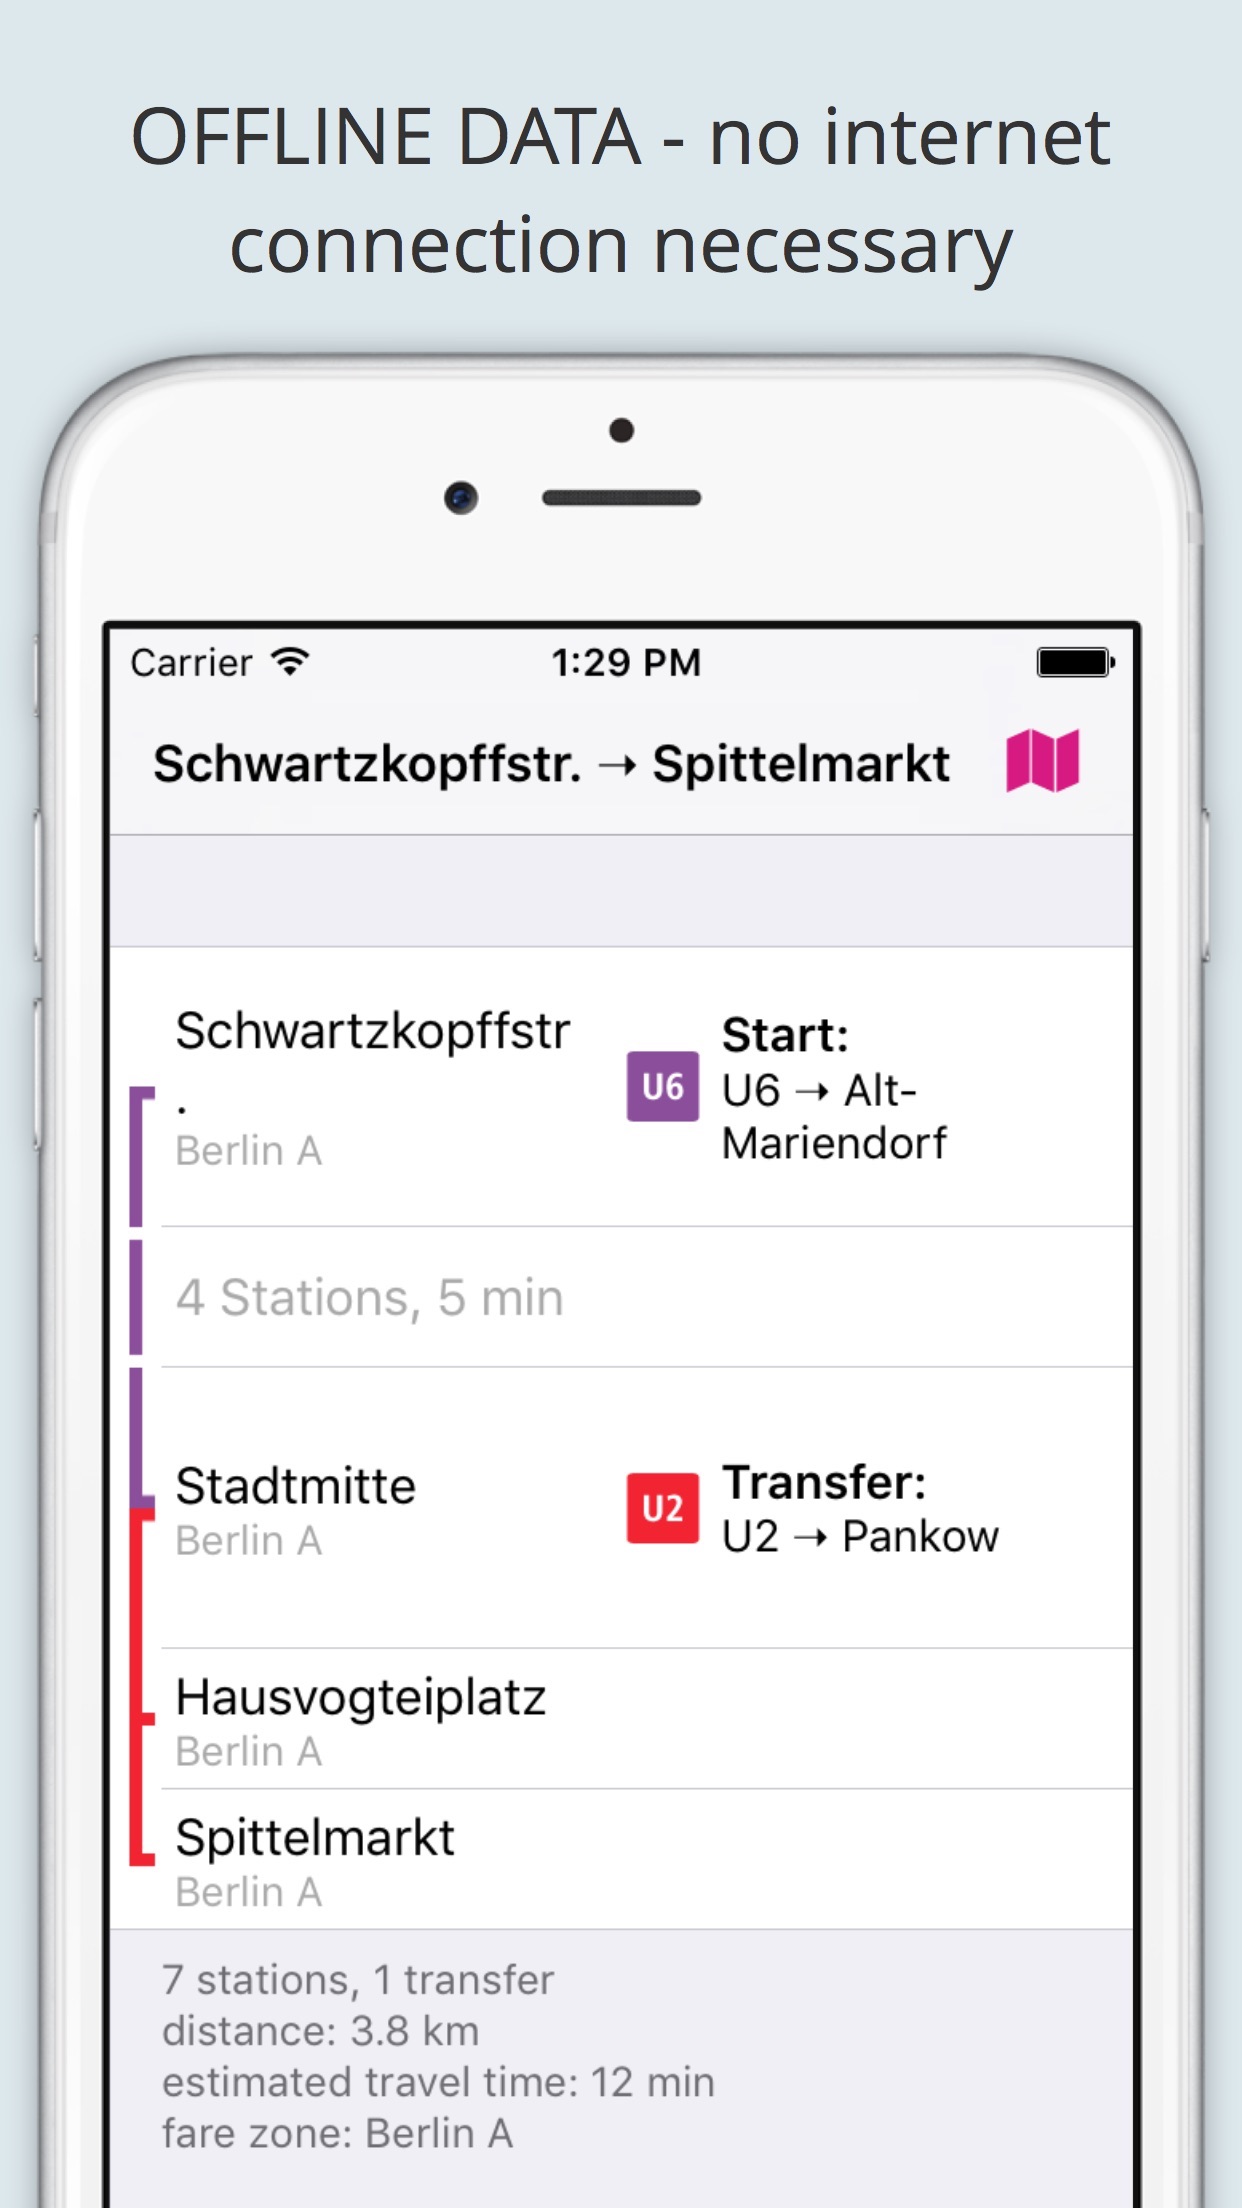 Screenshot do app City Rail Map - Travel Offline